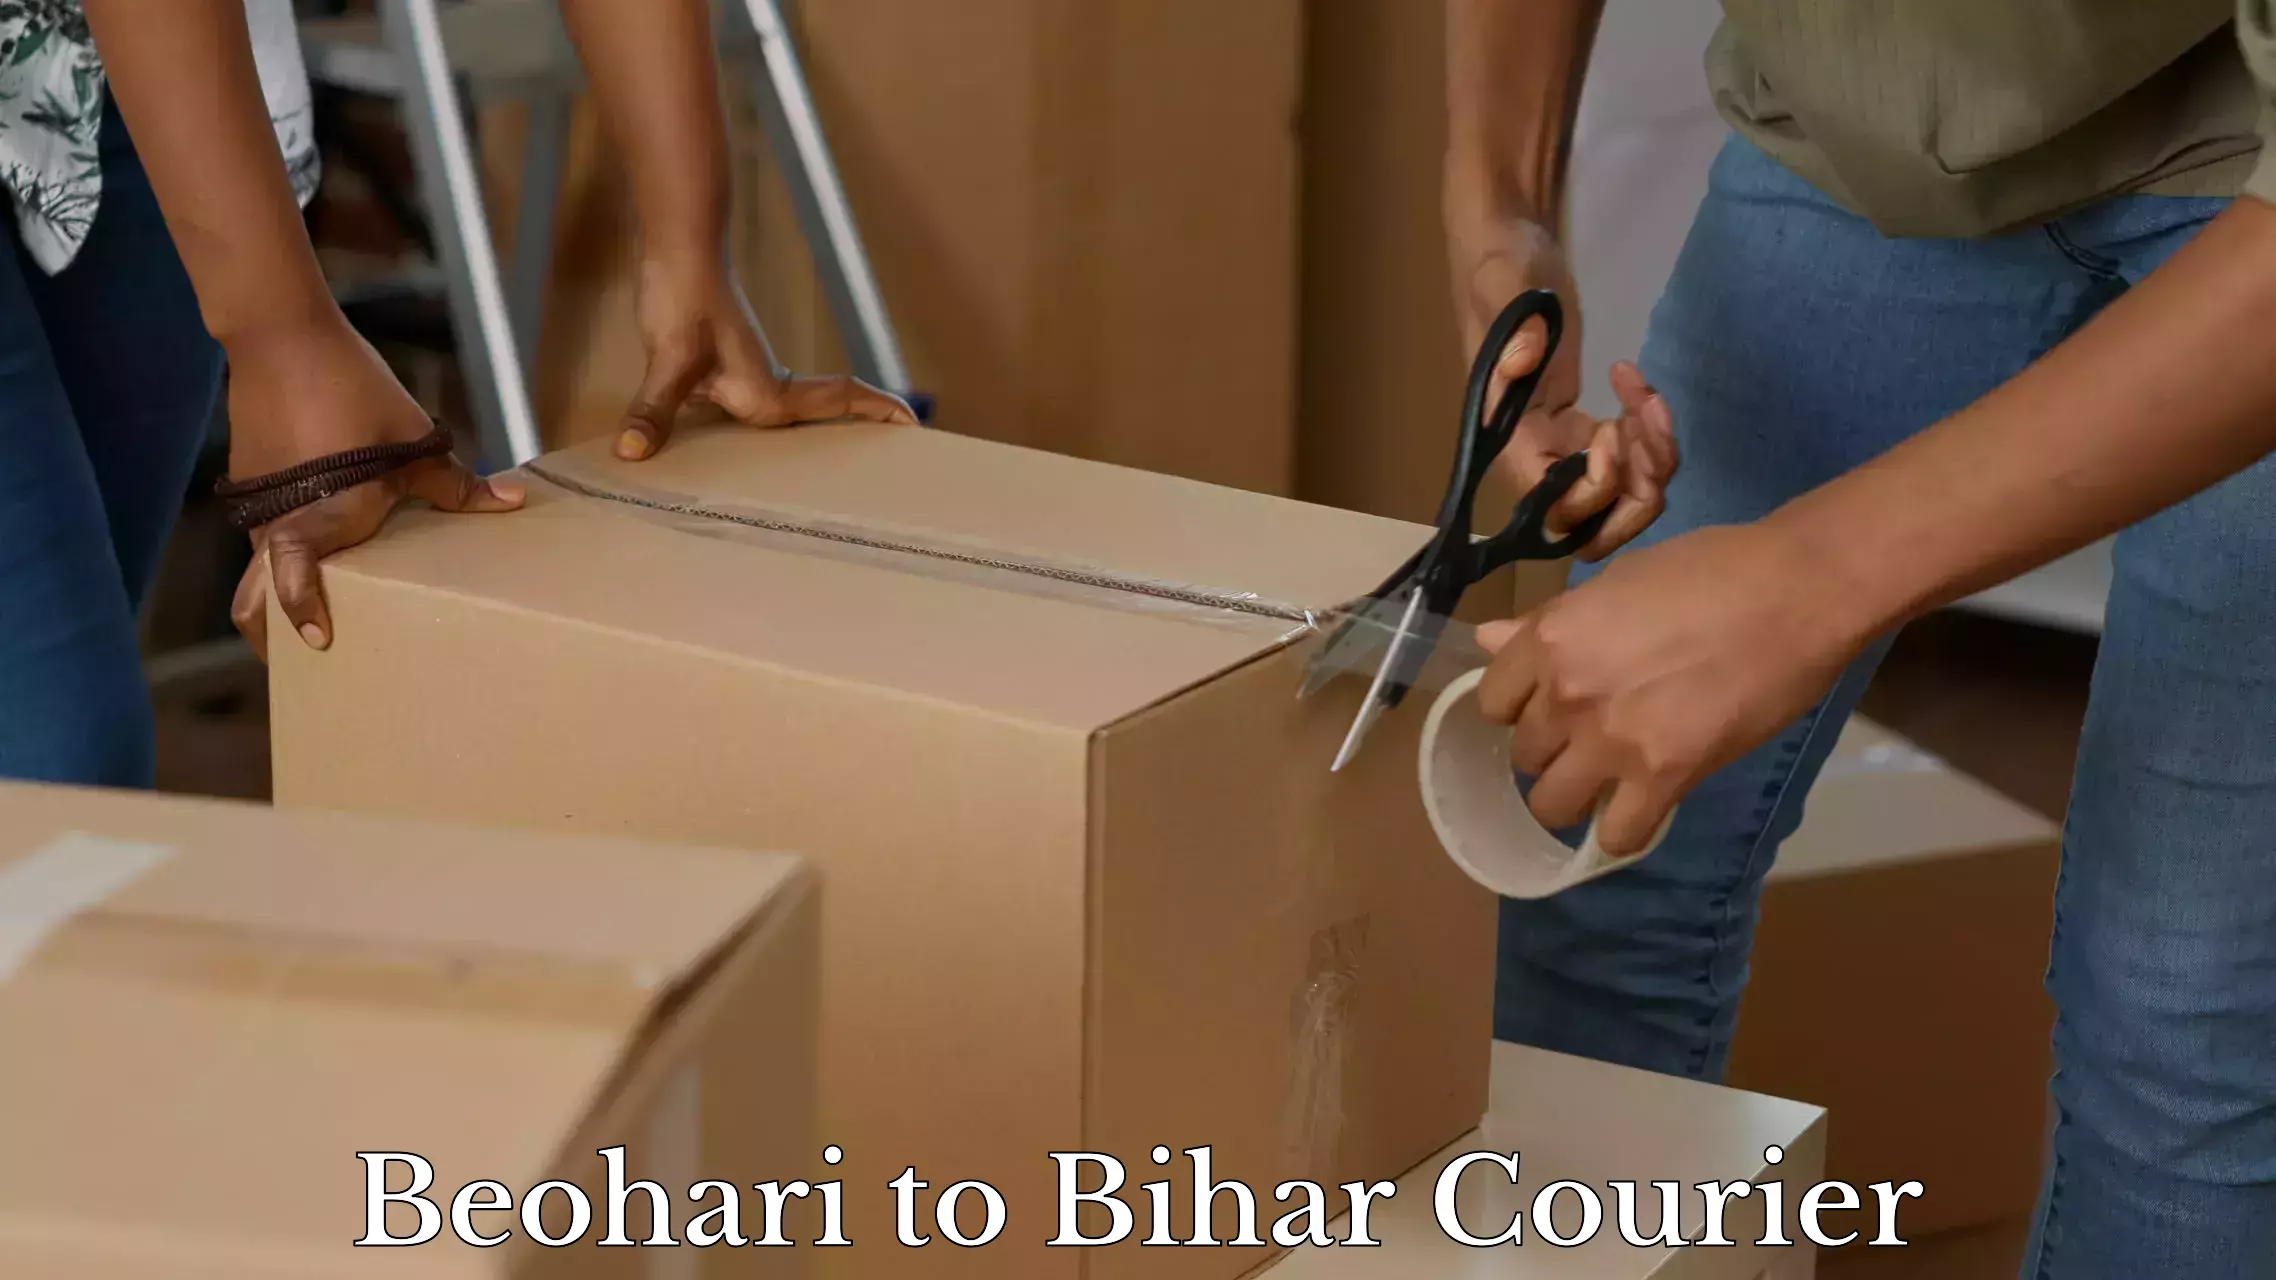 Baggage relocation service Beohari to Bihar